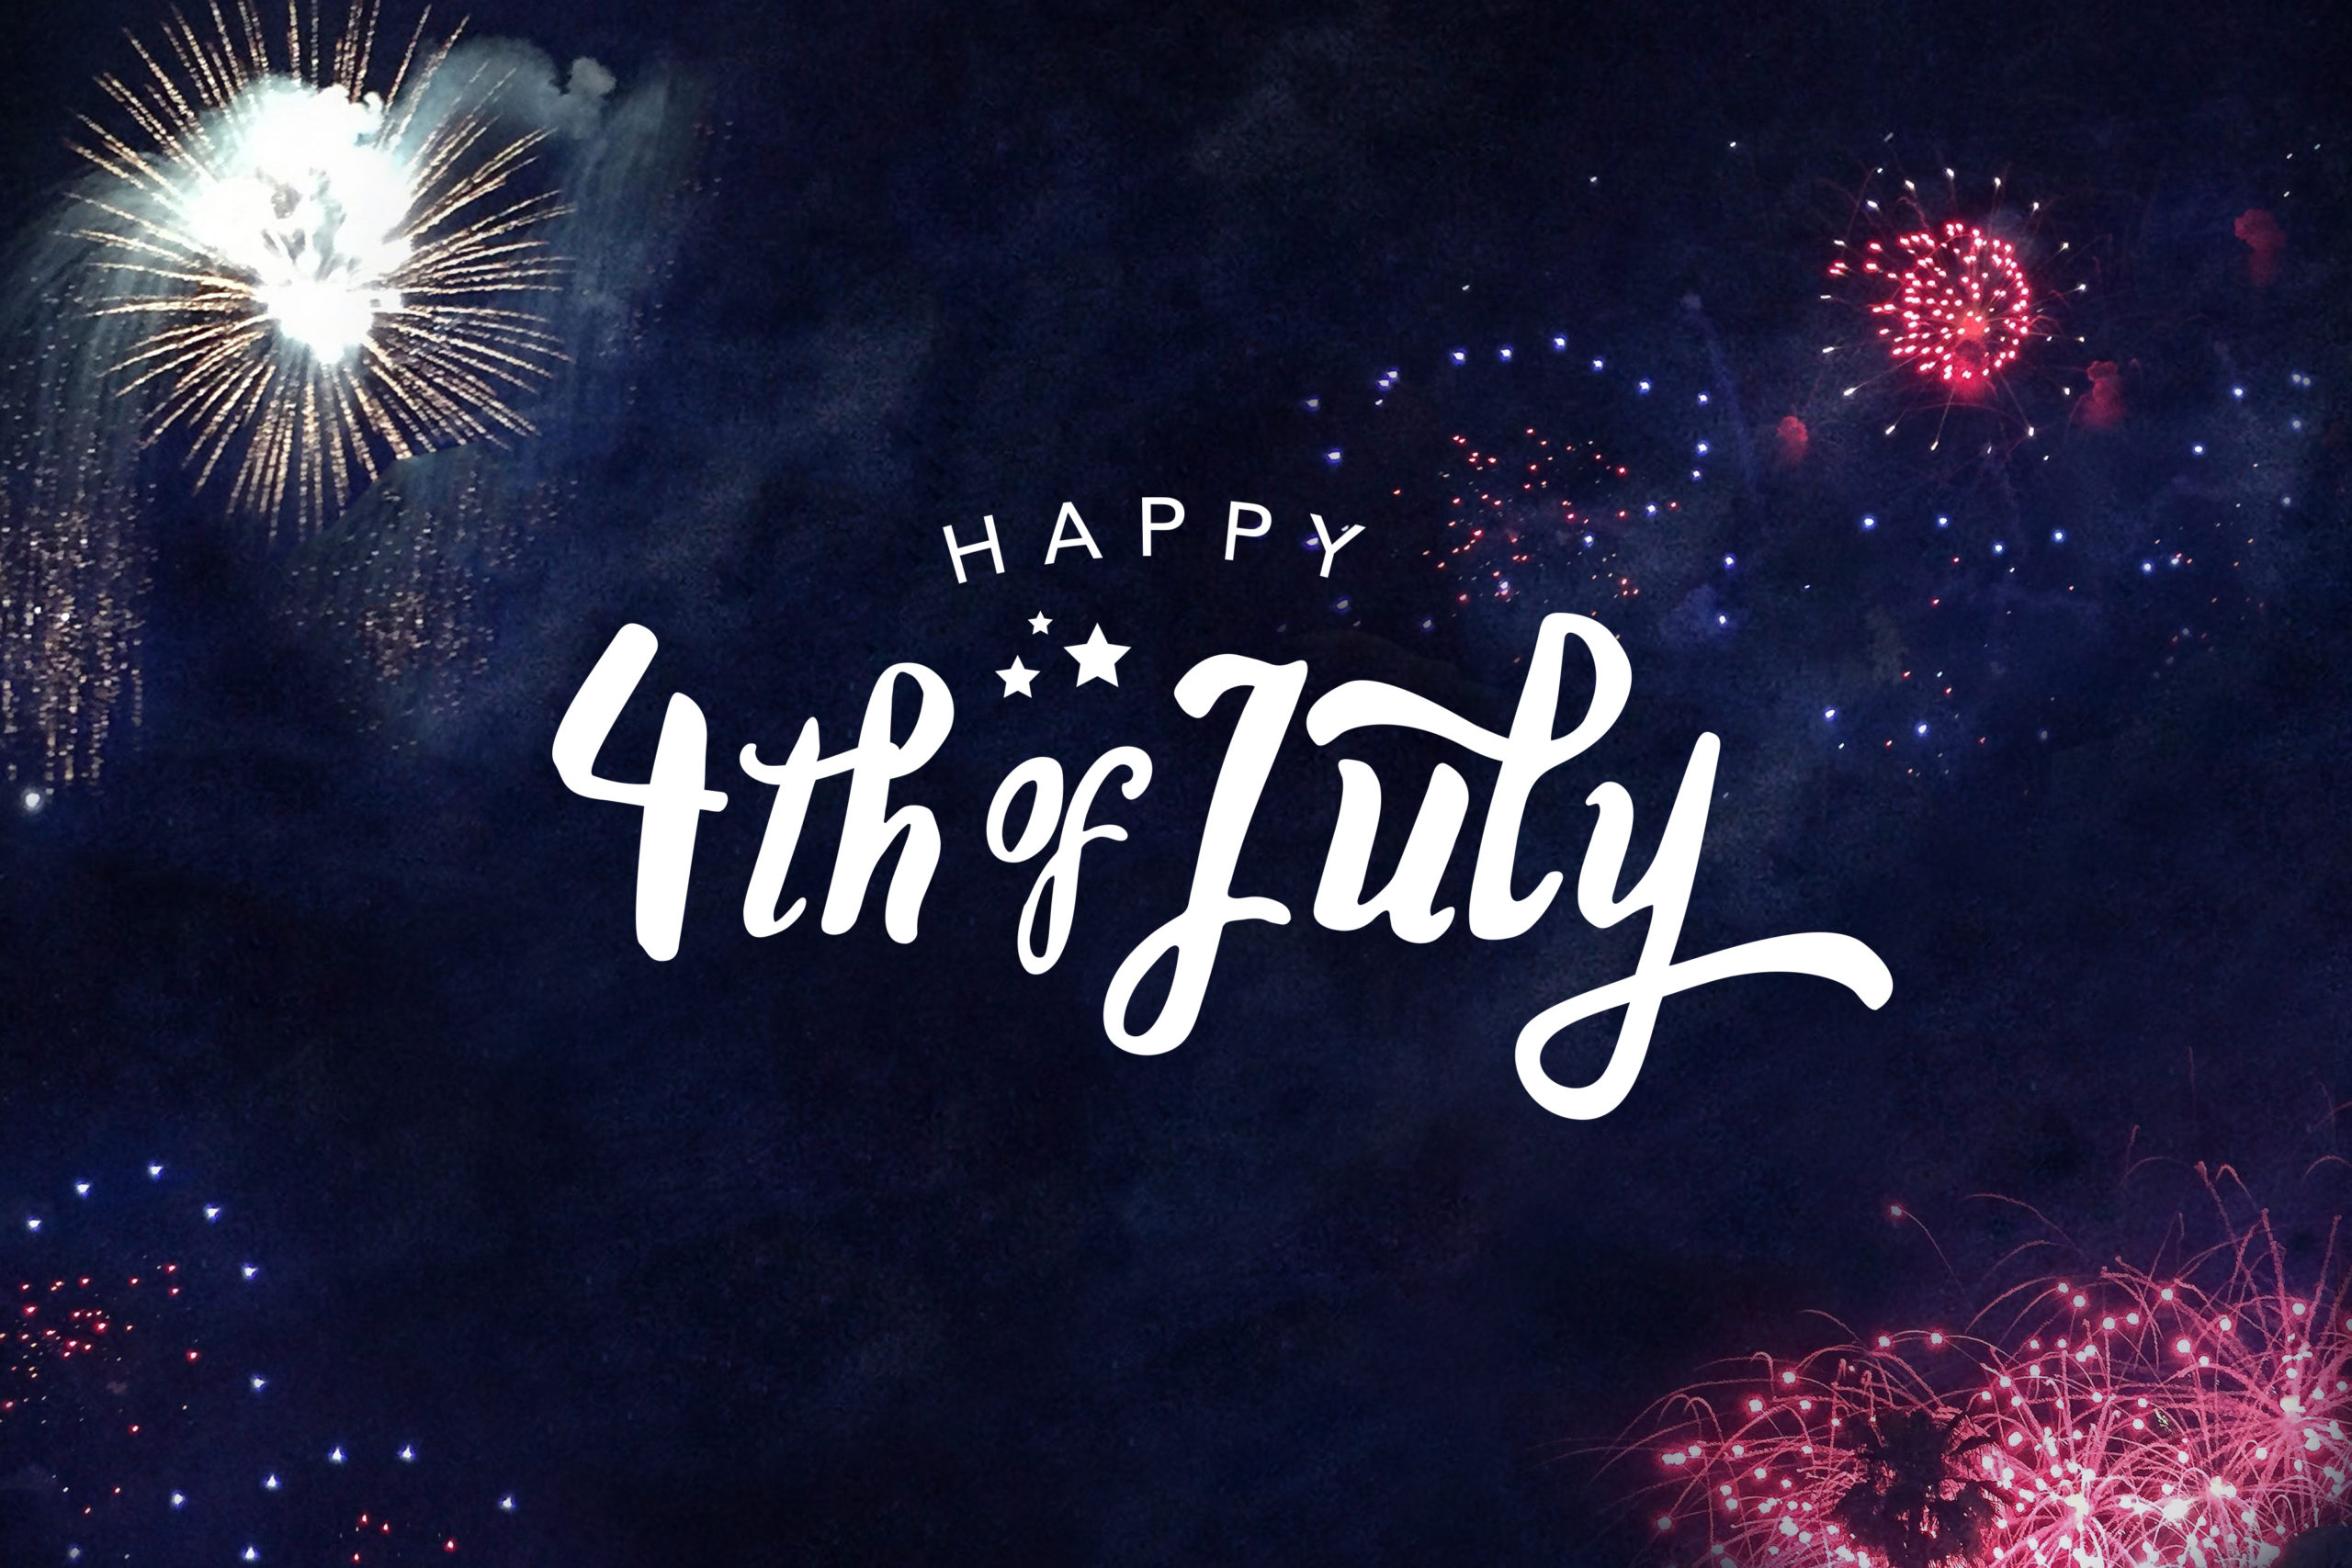 2020 4th of July fireworks rules | KXRO News Radio